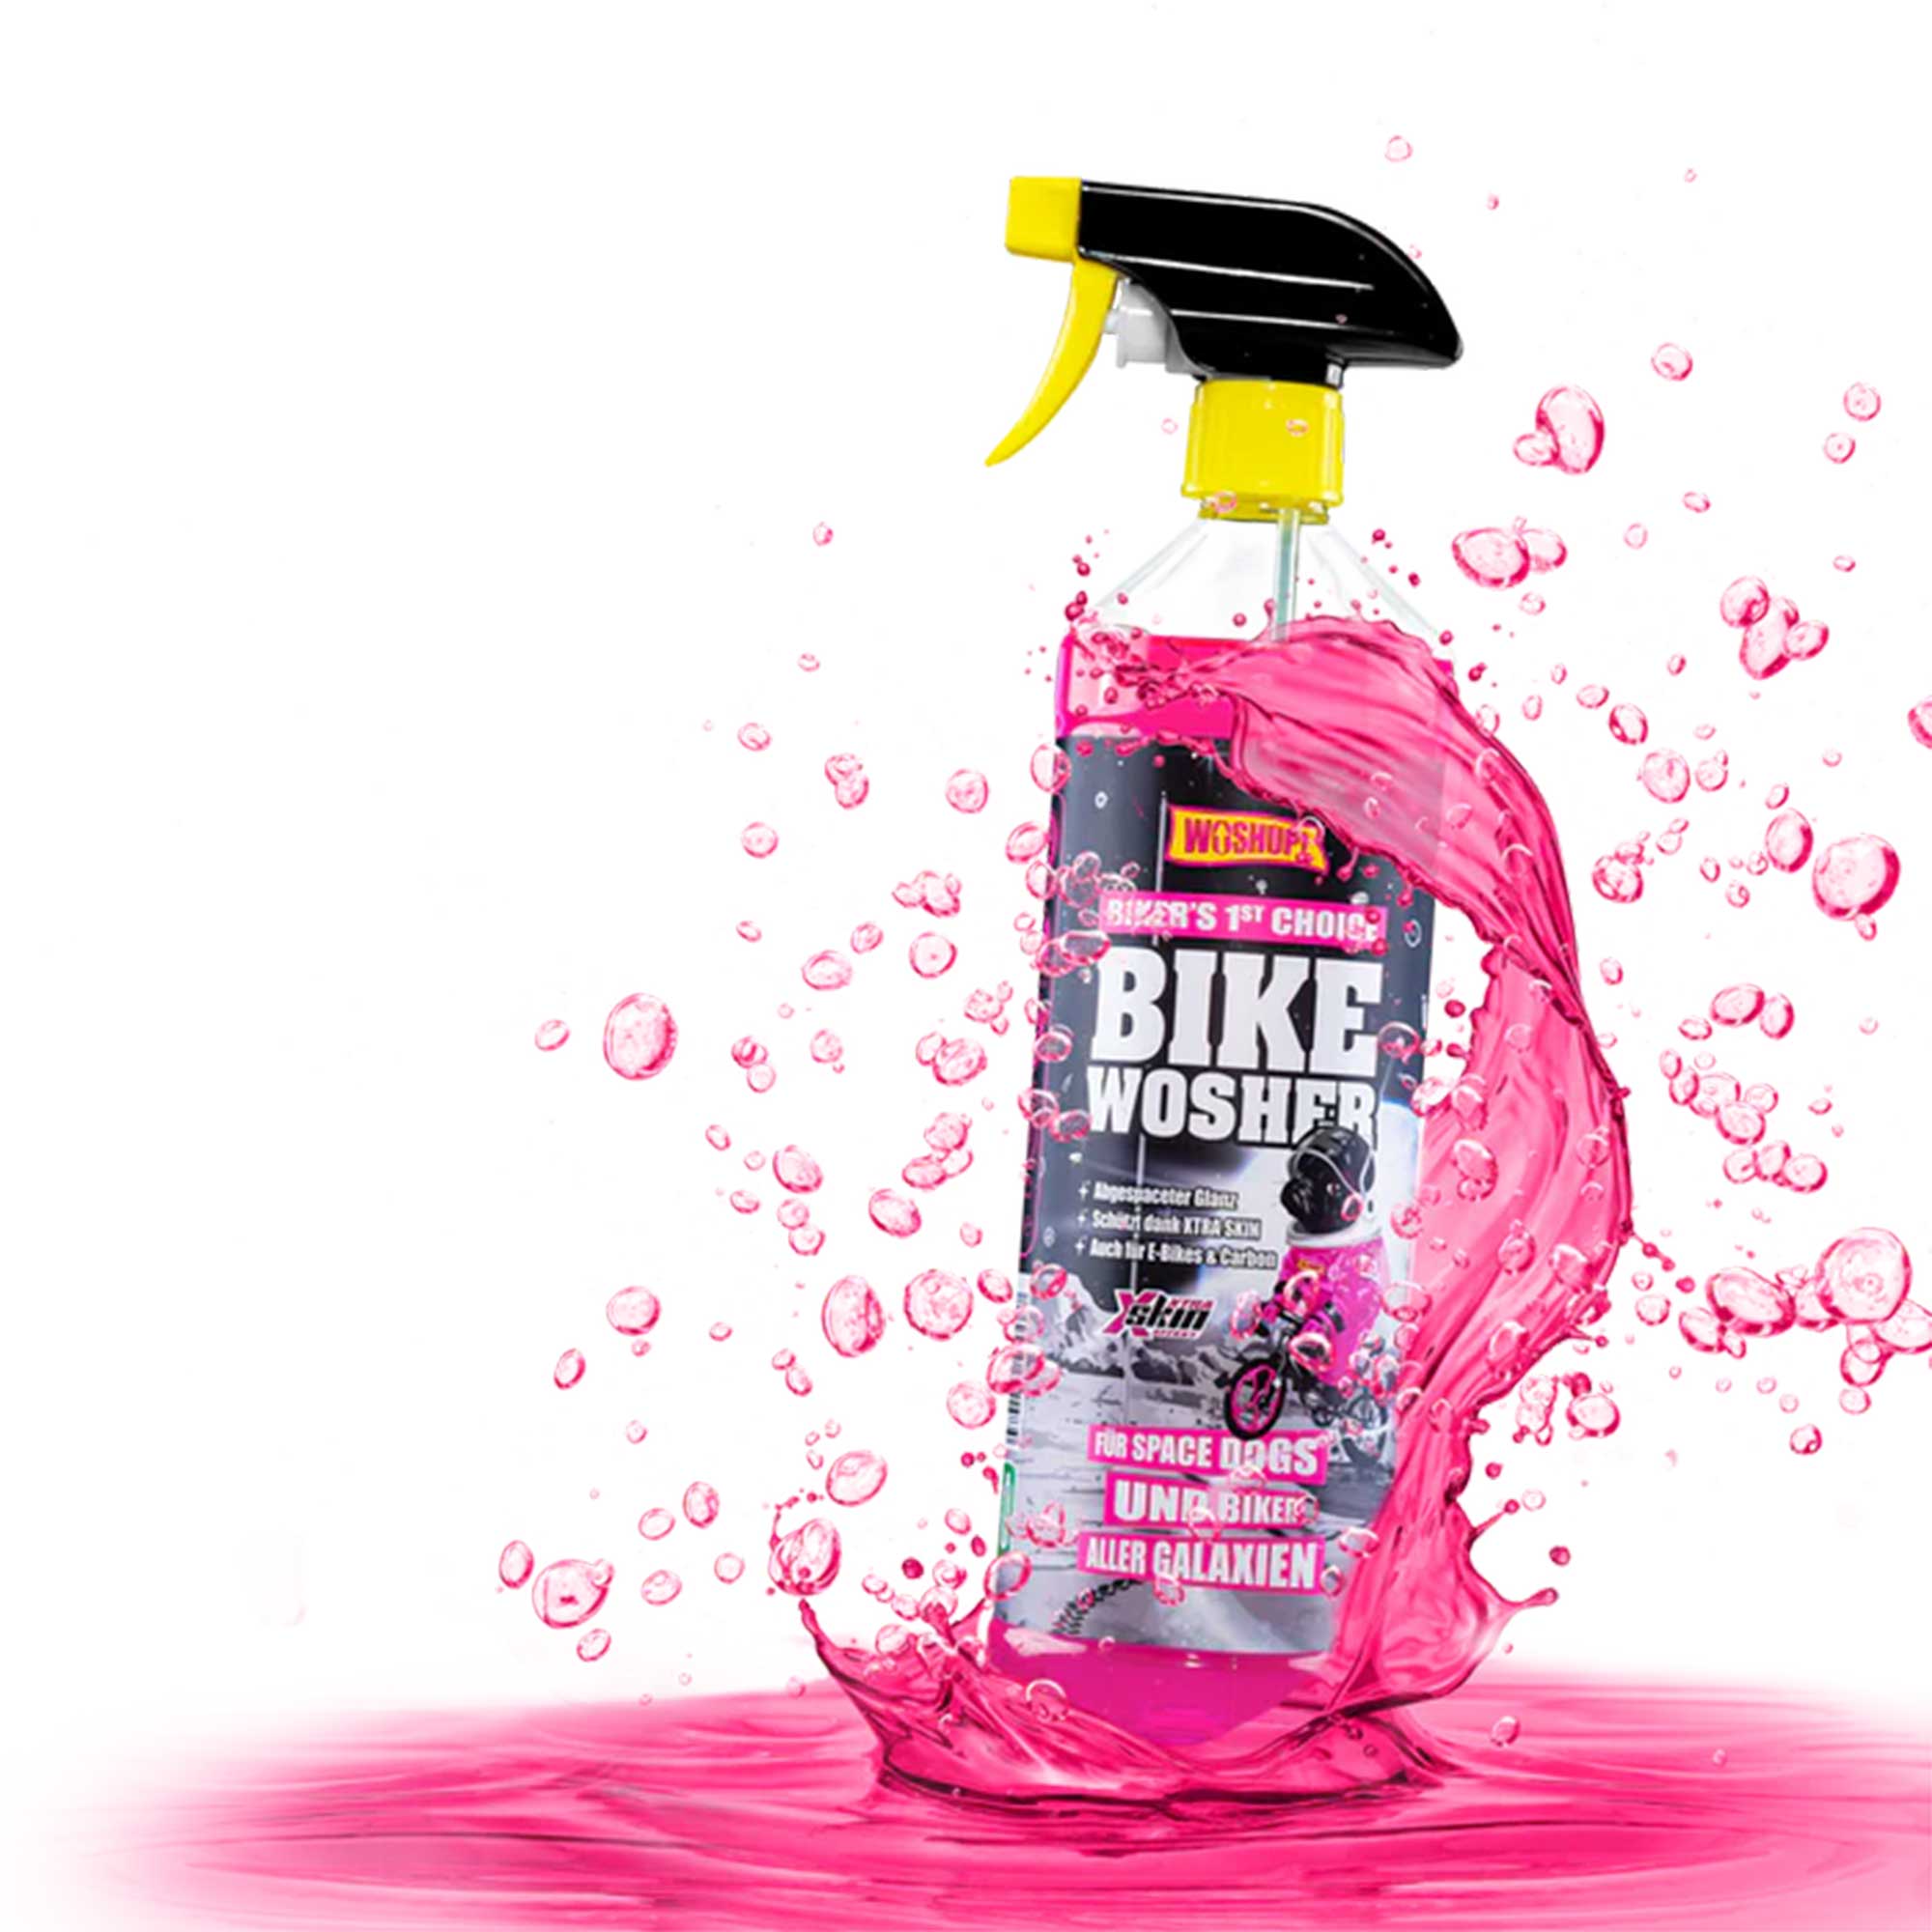 WOSHUP Bike Wosher Bicycle Cleaner + Free Cloth!